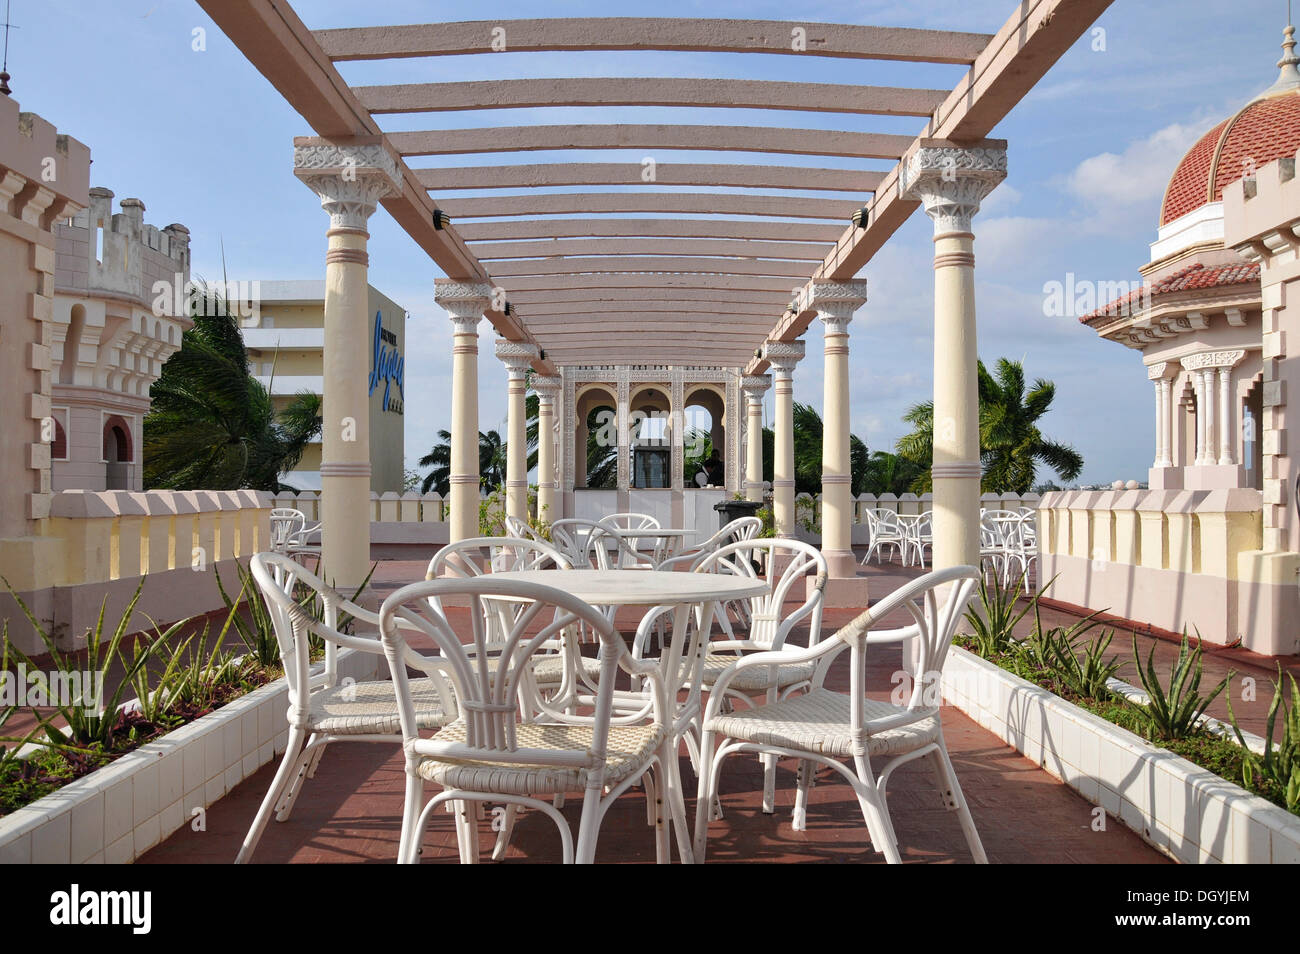 Terrasse de l'hôtel Palacio del Valle, Punta Gorda peninsula, Cienfuegos, Cuba, Caraïbes, Amérique centrale Banque D'Images